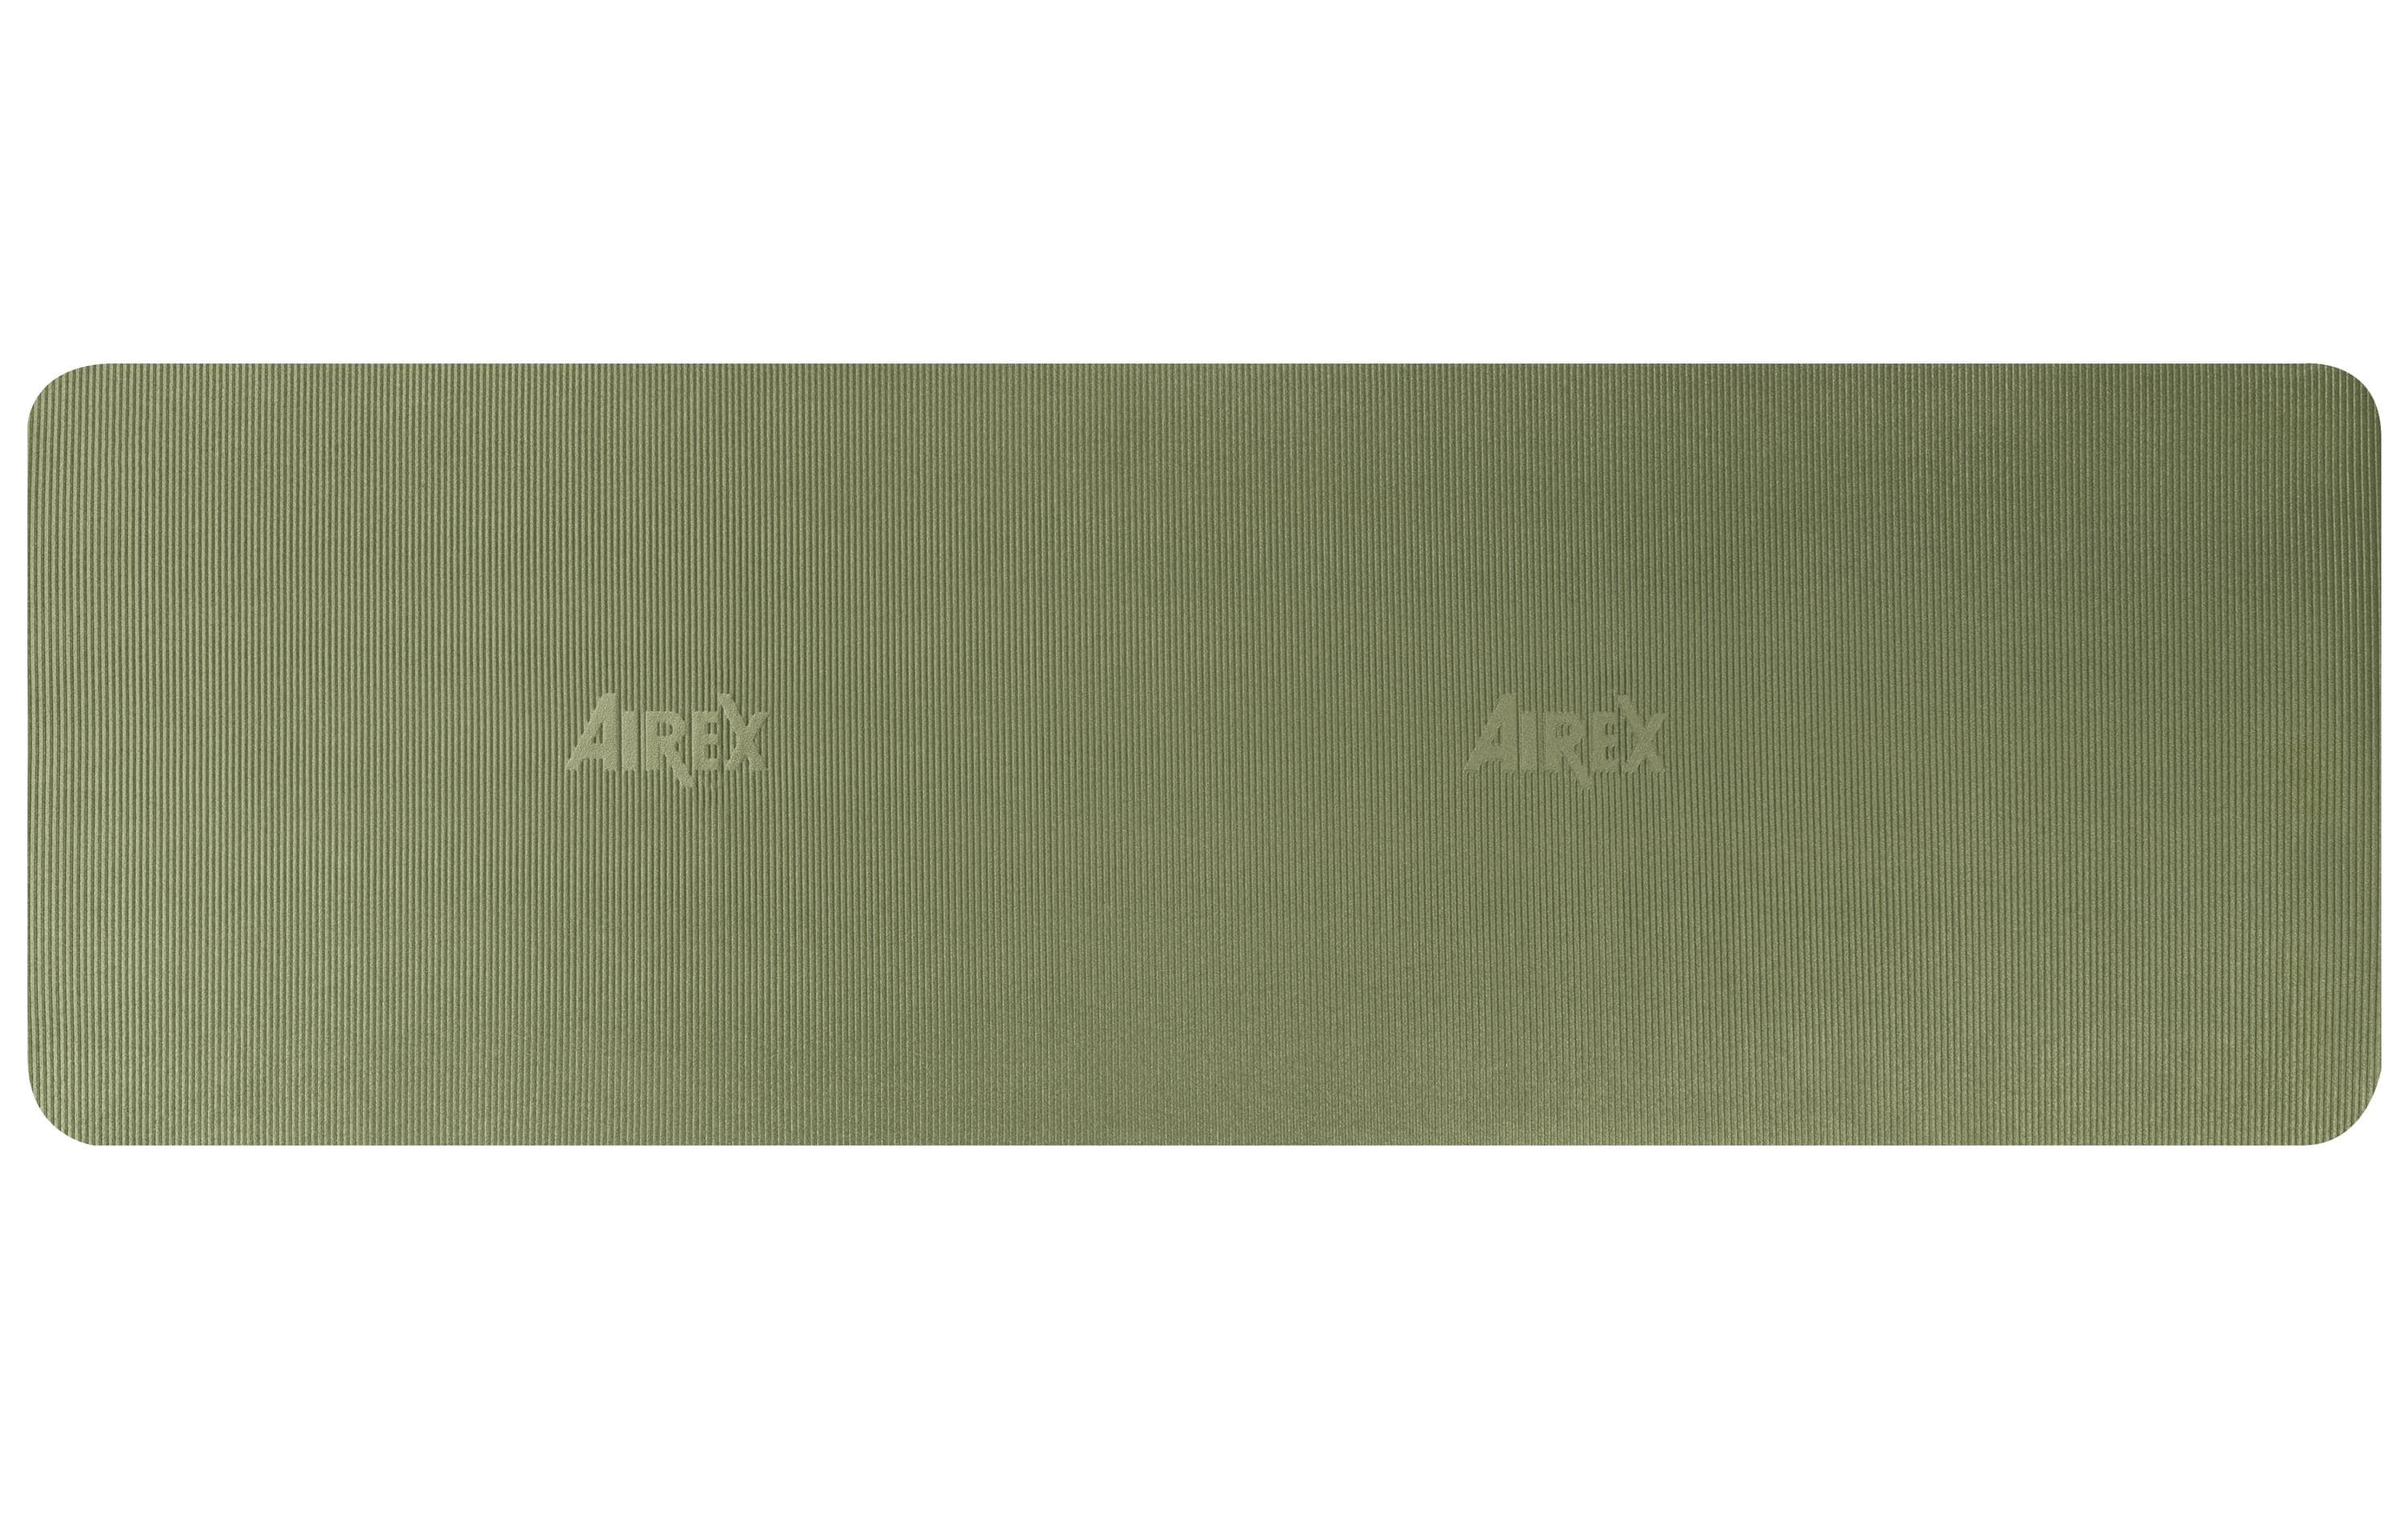 Airex Trainingsmatte Heritage Olive/Limited Edition